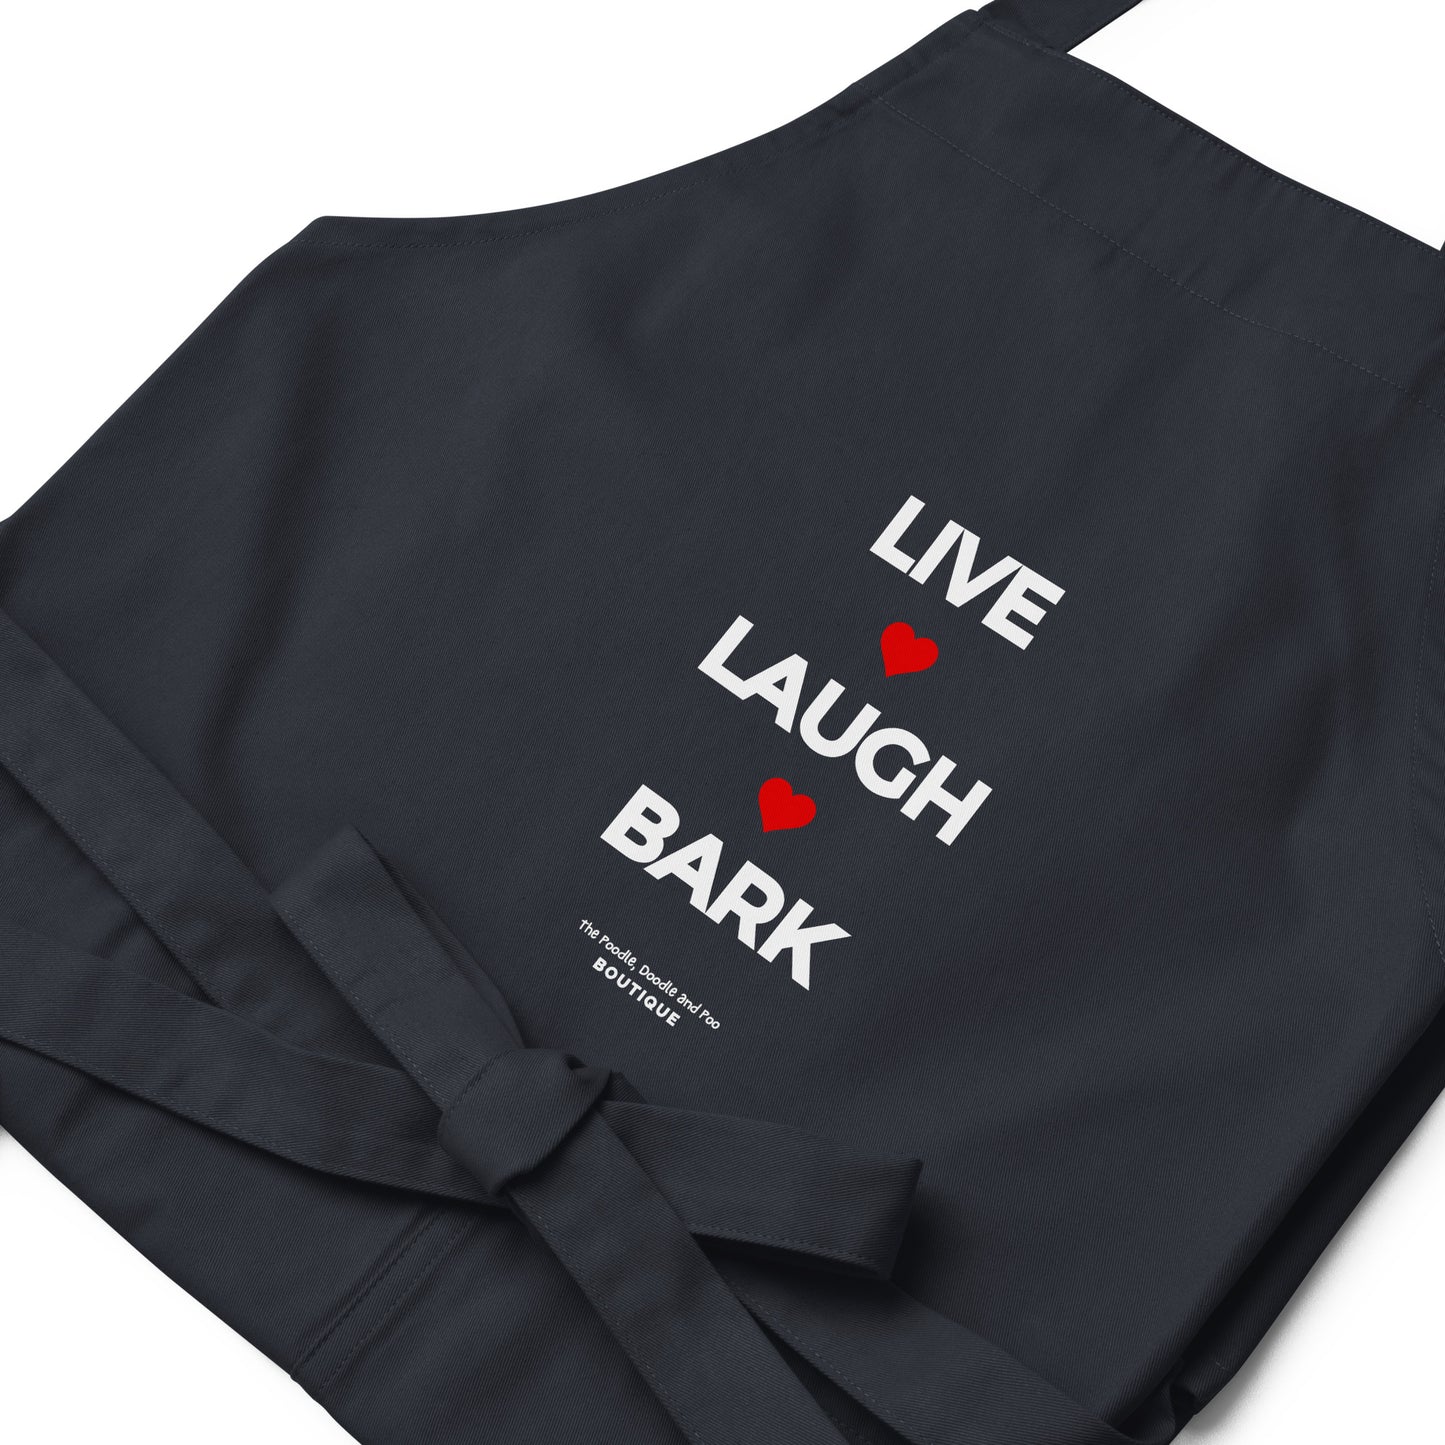 "Live, Laugh, Bark" Organic cotton apron